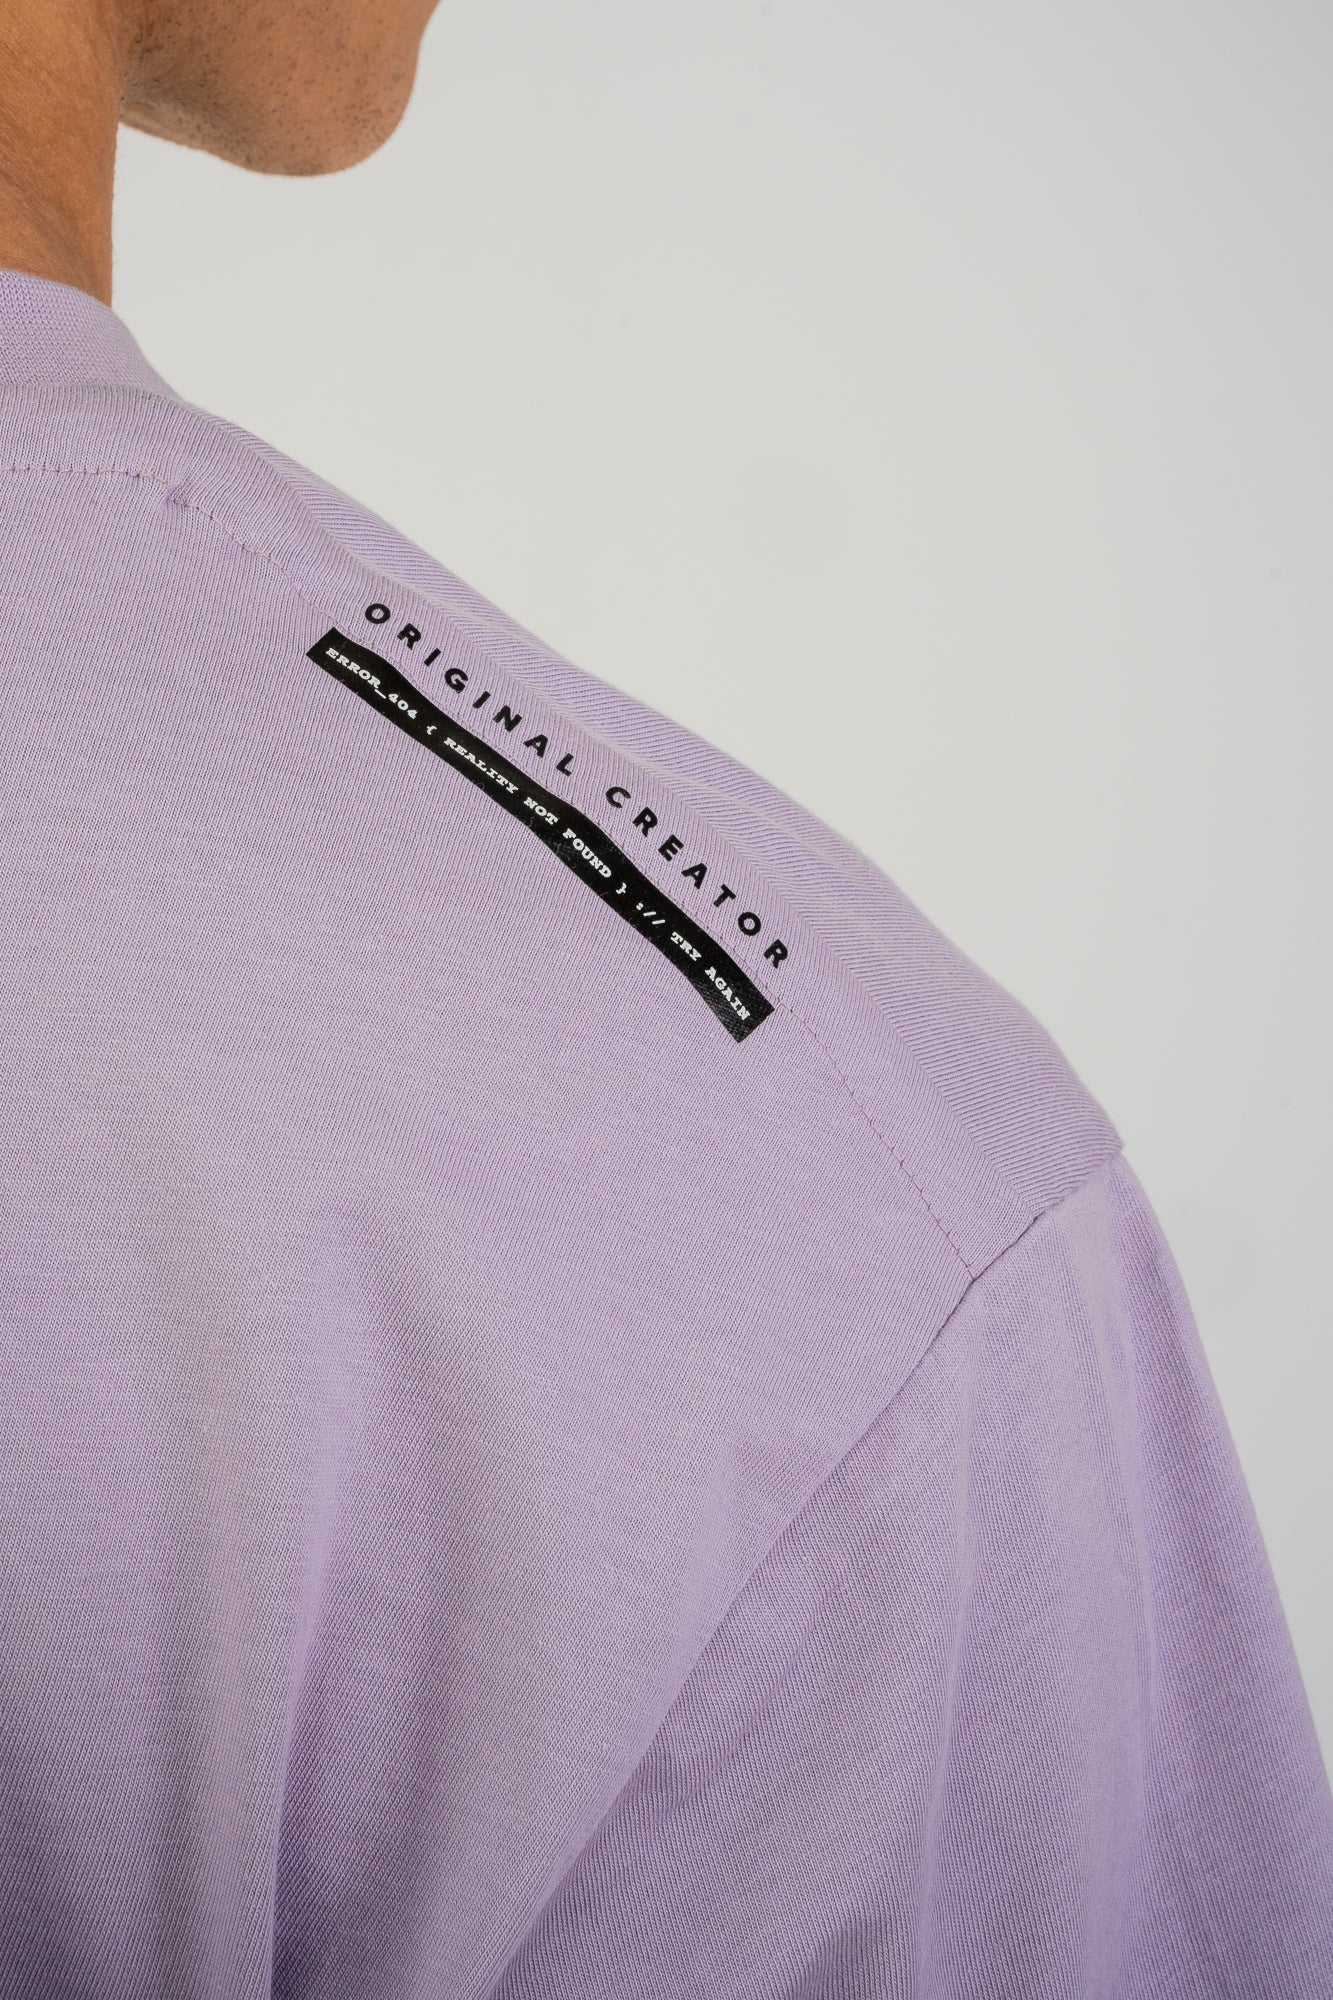 Internet T-Shirt - Faded Lilac